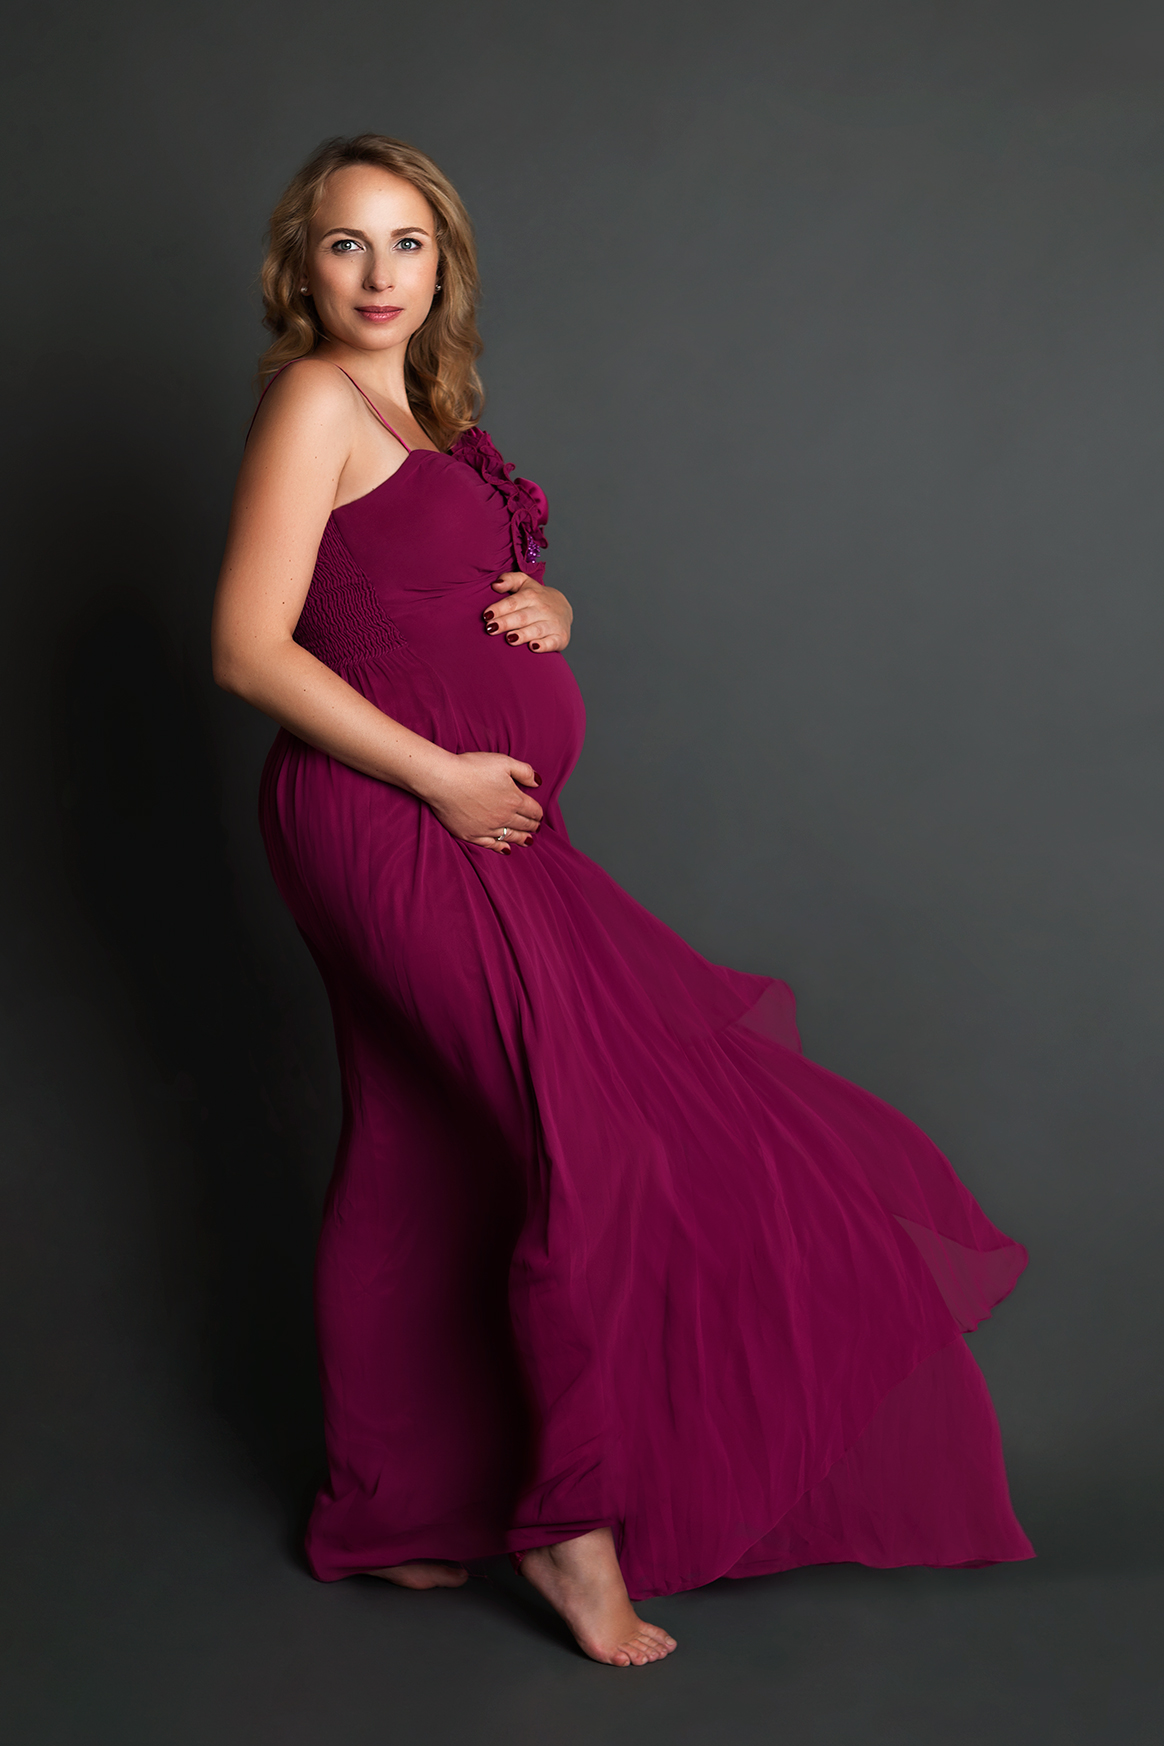 Family portrait photography  |  Pregnancy photo session